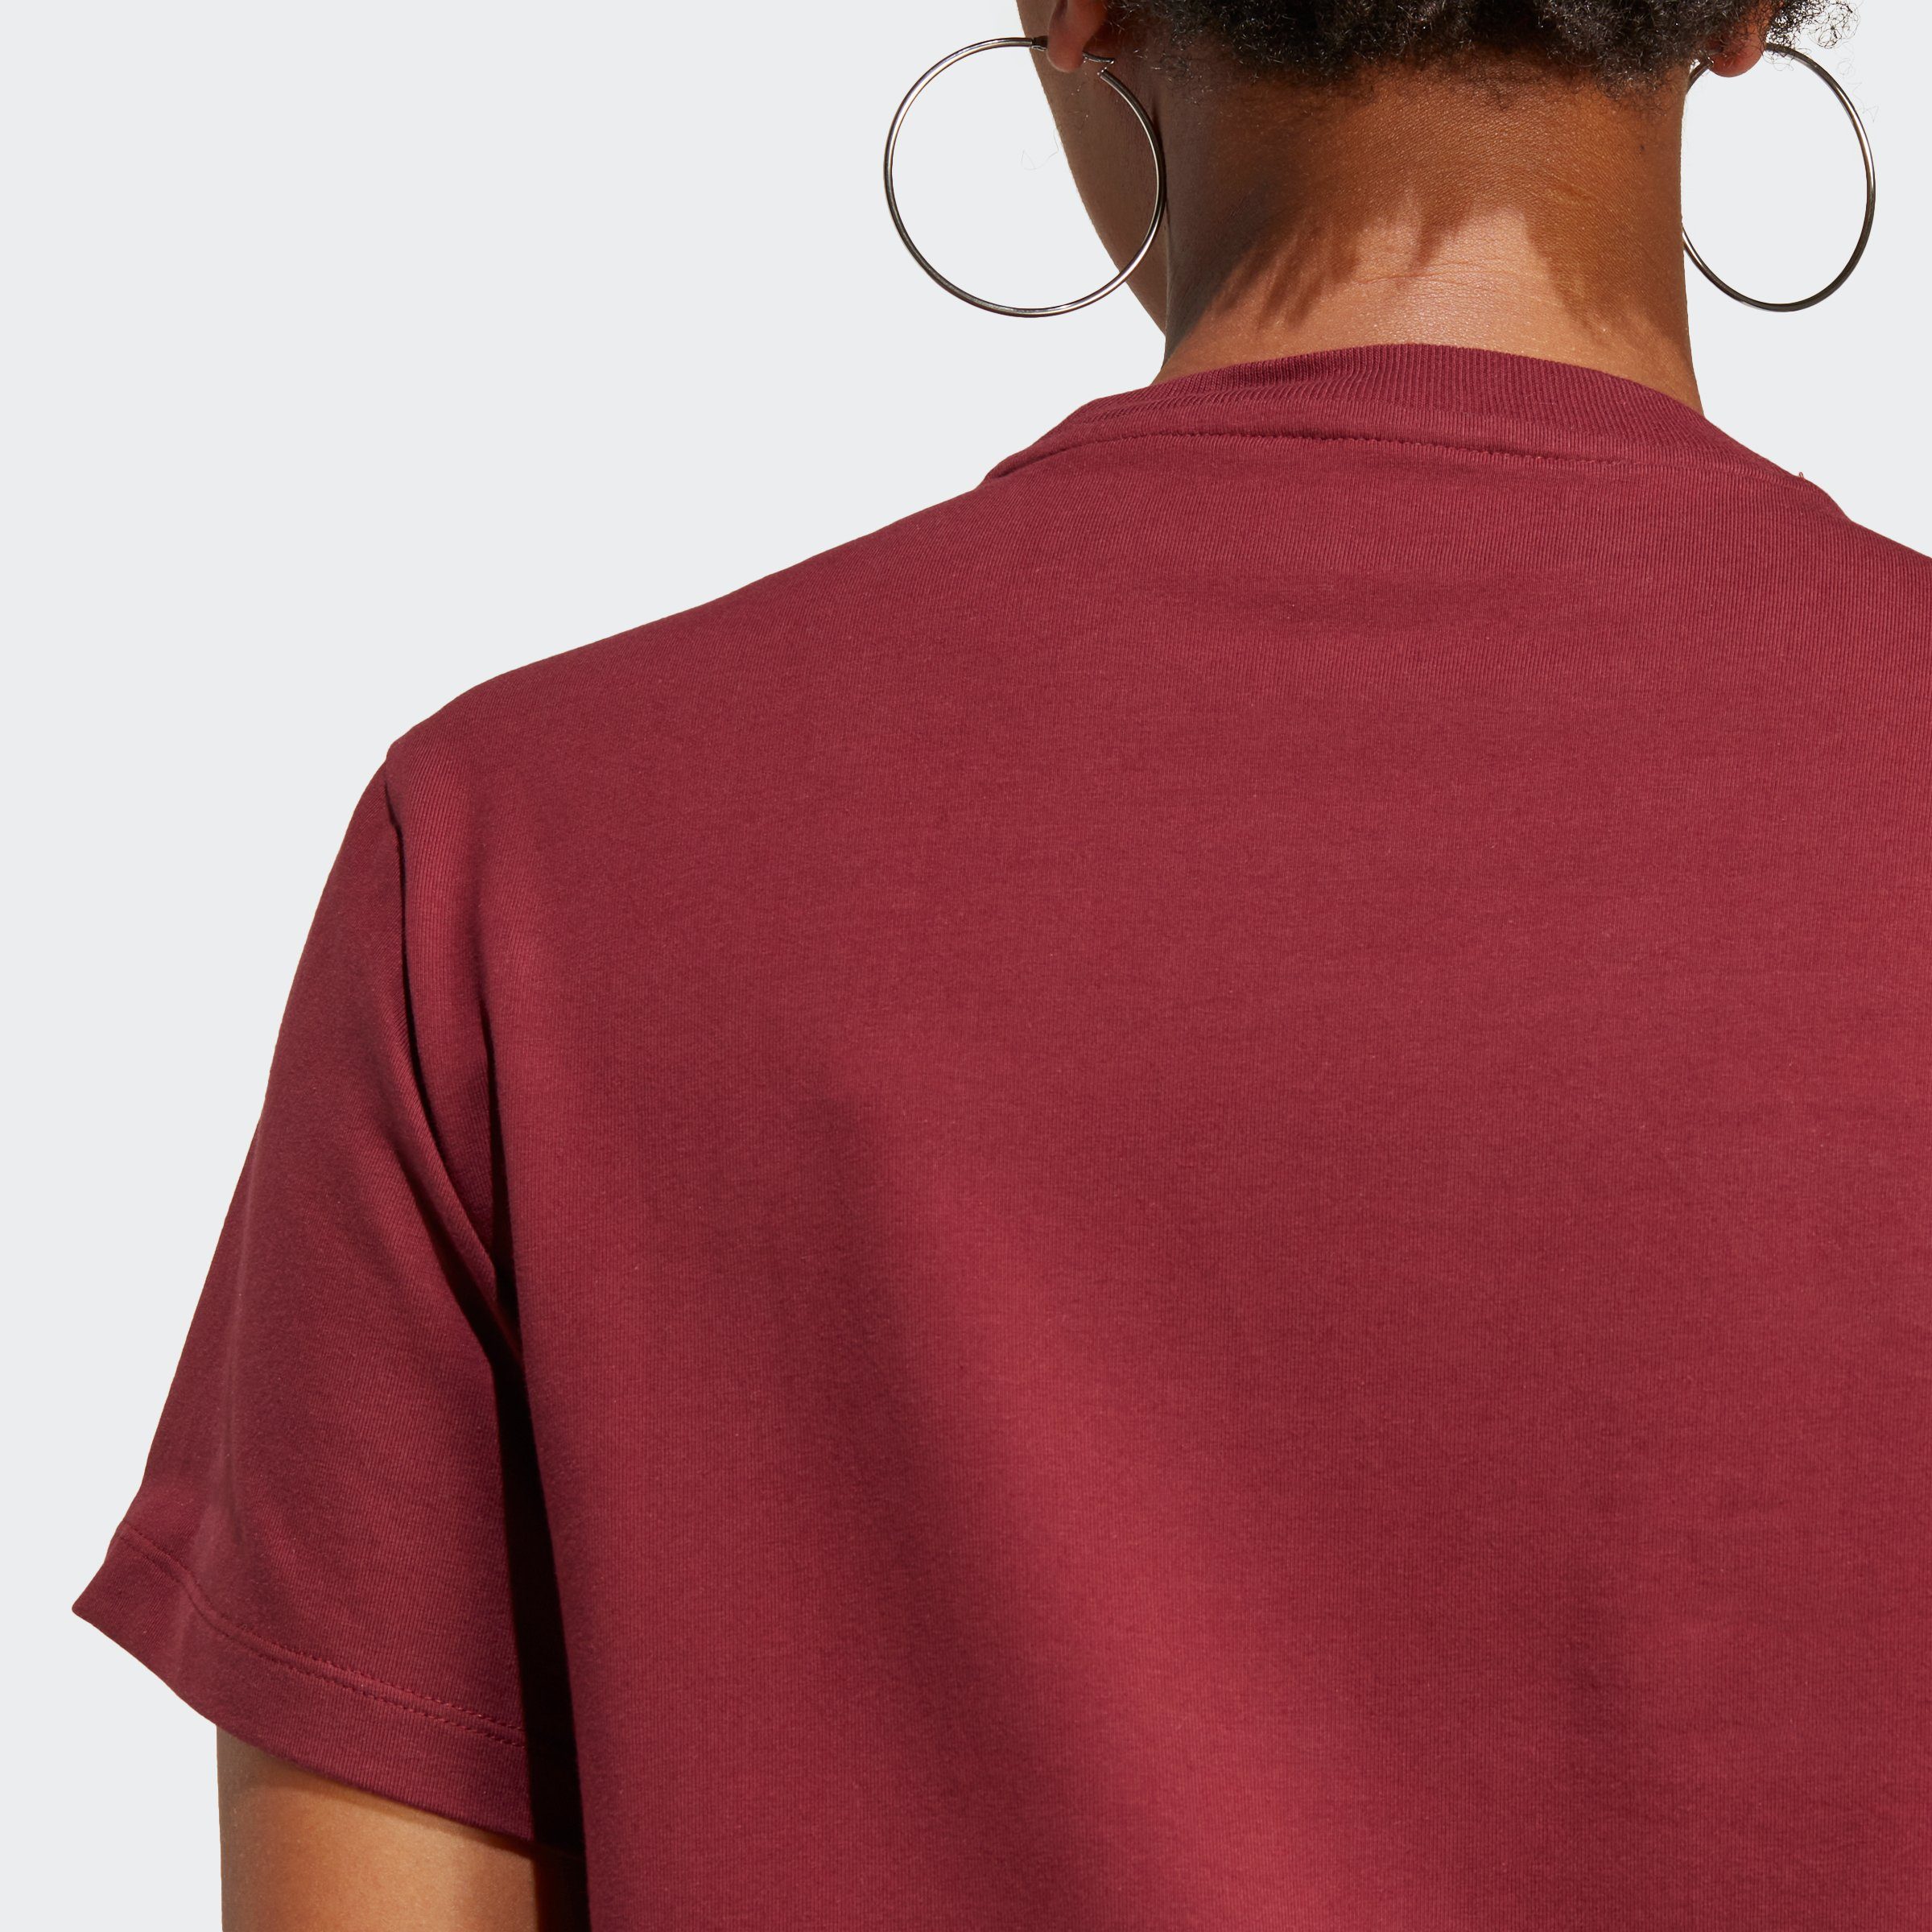 ADICOLOR Shadow TREFOIL Red T-Shirt Originals CLASSICS adidas